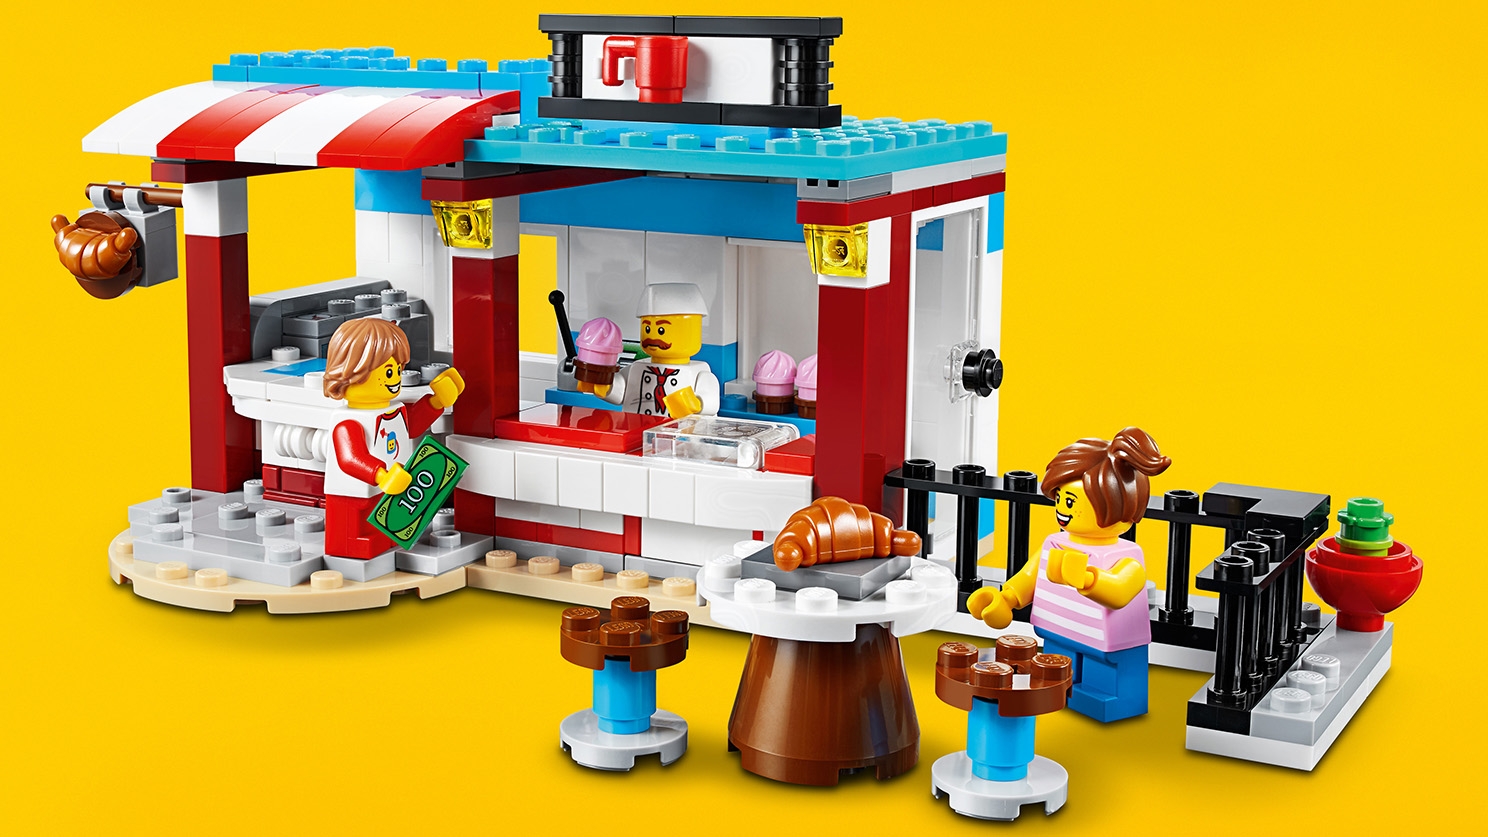 Modular Sweet Surprises 31077 - LEGO® Creator Sets - LEGO.com for kids